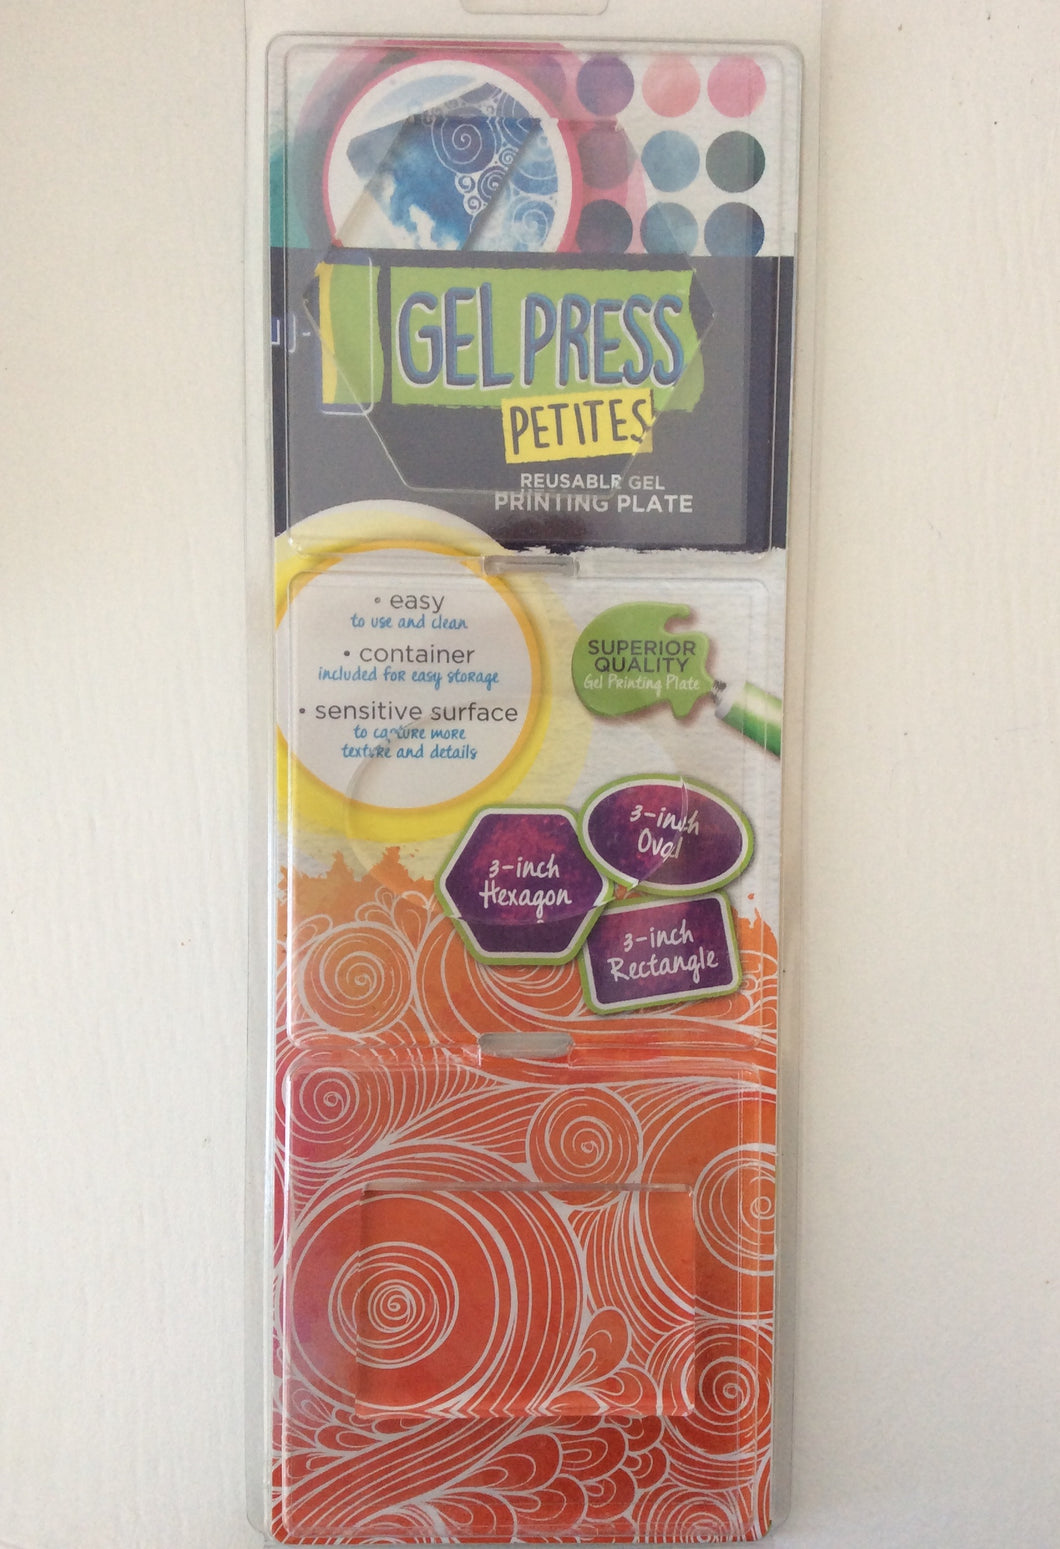 Gel Press Petites Reusable Gel Printing 3” Plates pack of 3